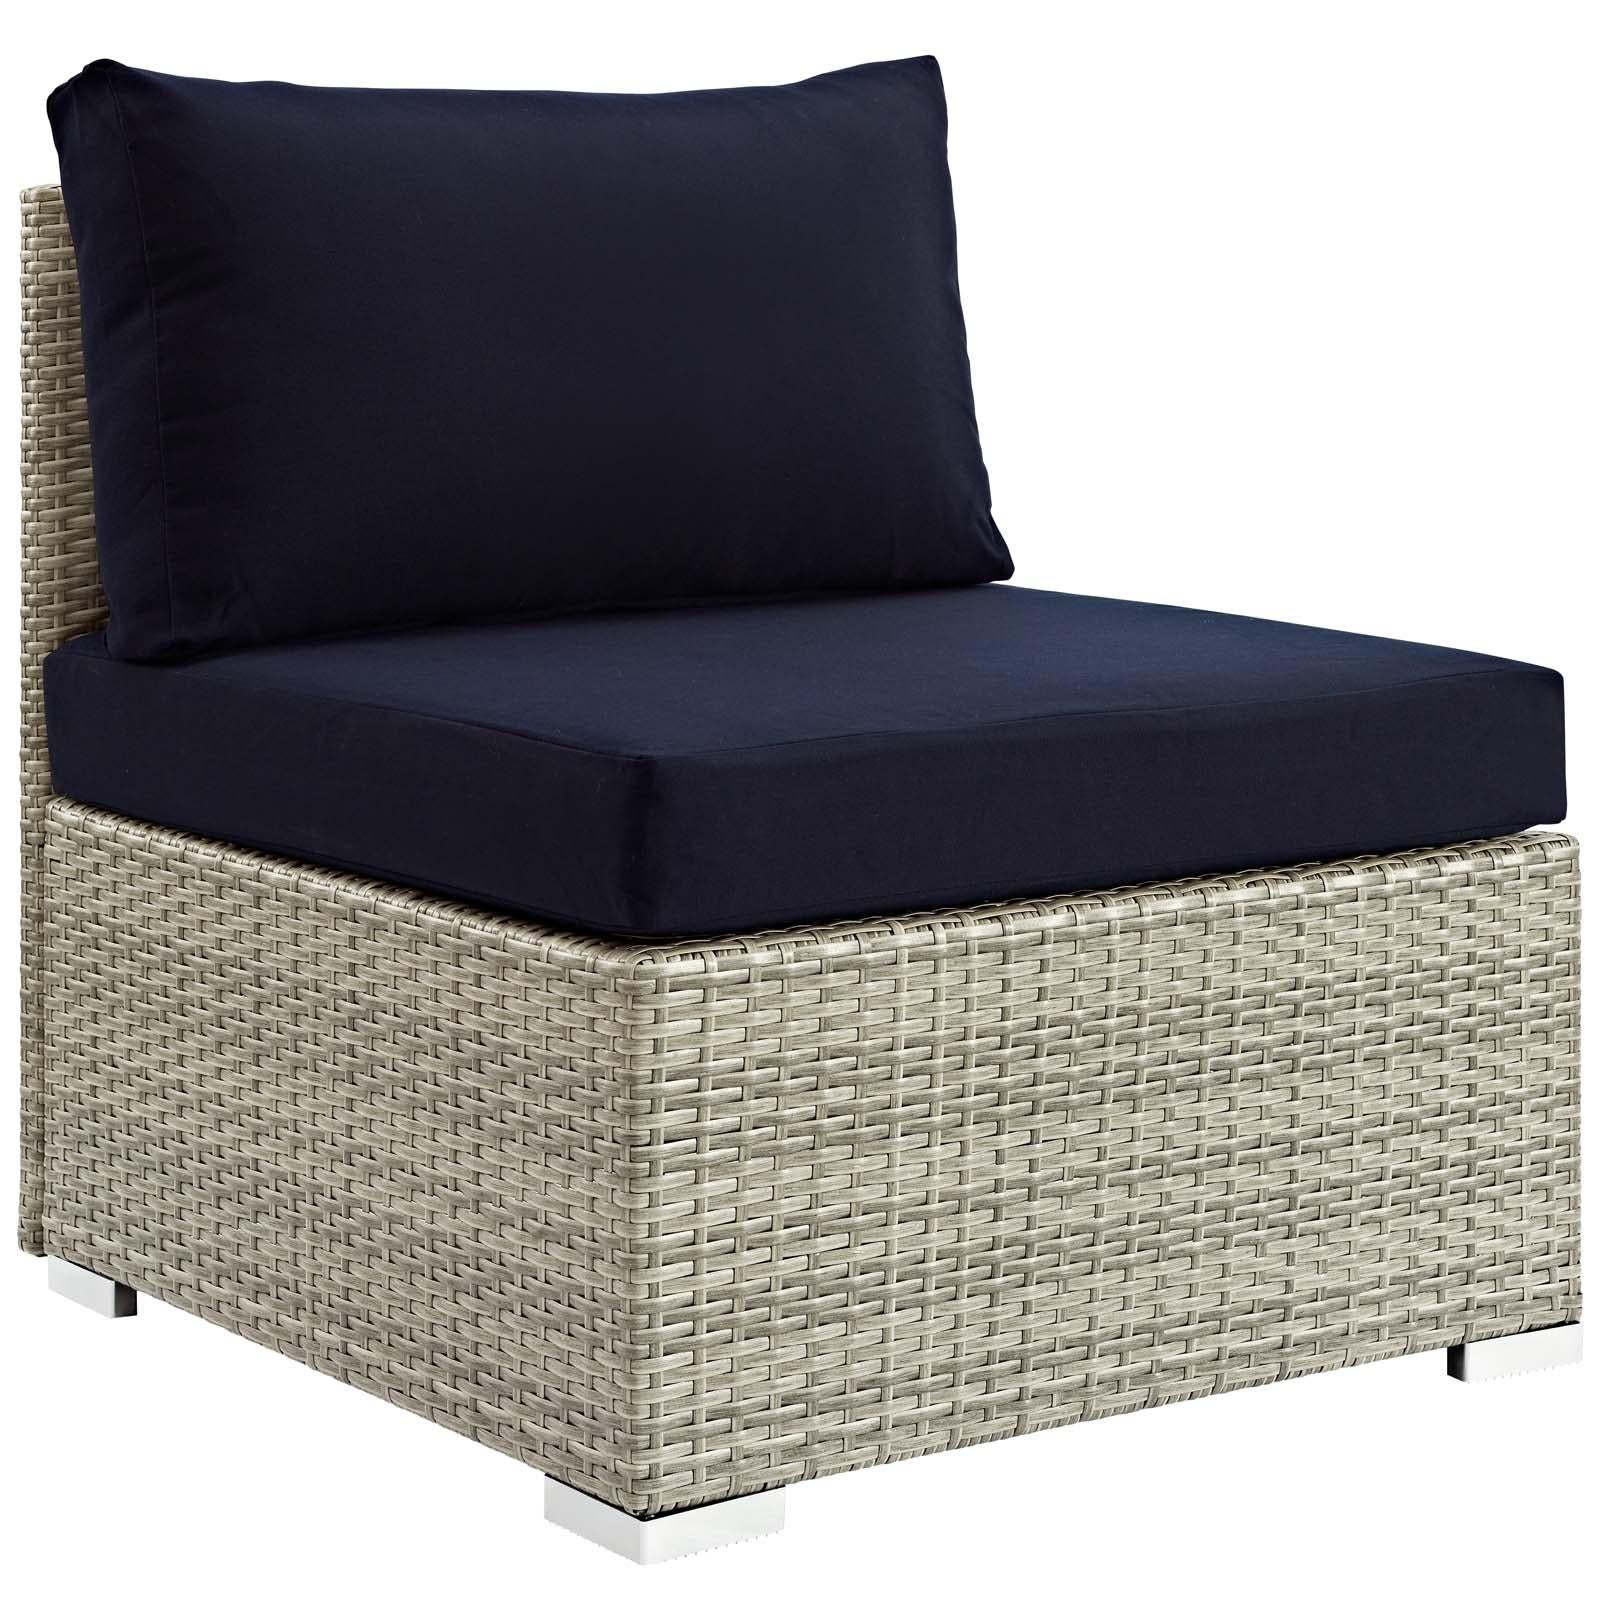 Modway Furniture Modern Repose 6 Piece Outdoor Patio Sunbrella® Sectional Set - EEI-3017